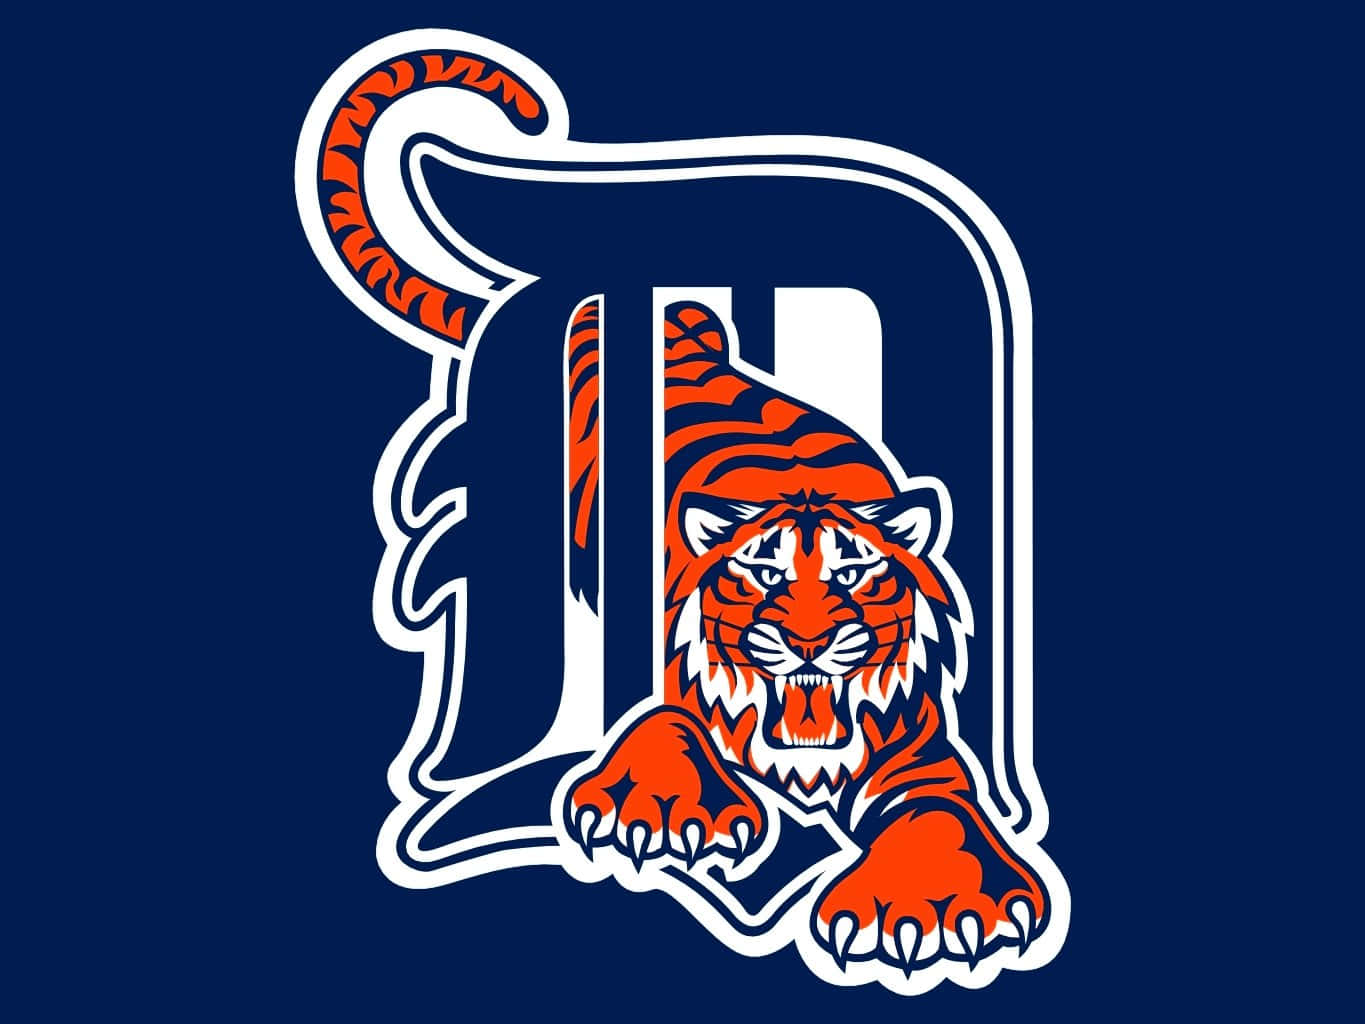 100+] Detroit Tigers Logo Wallpapers